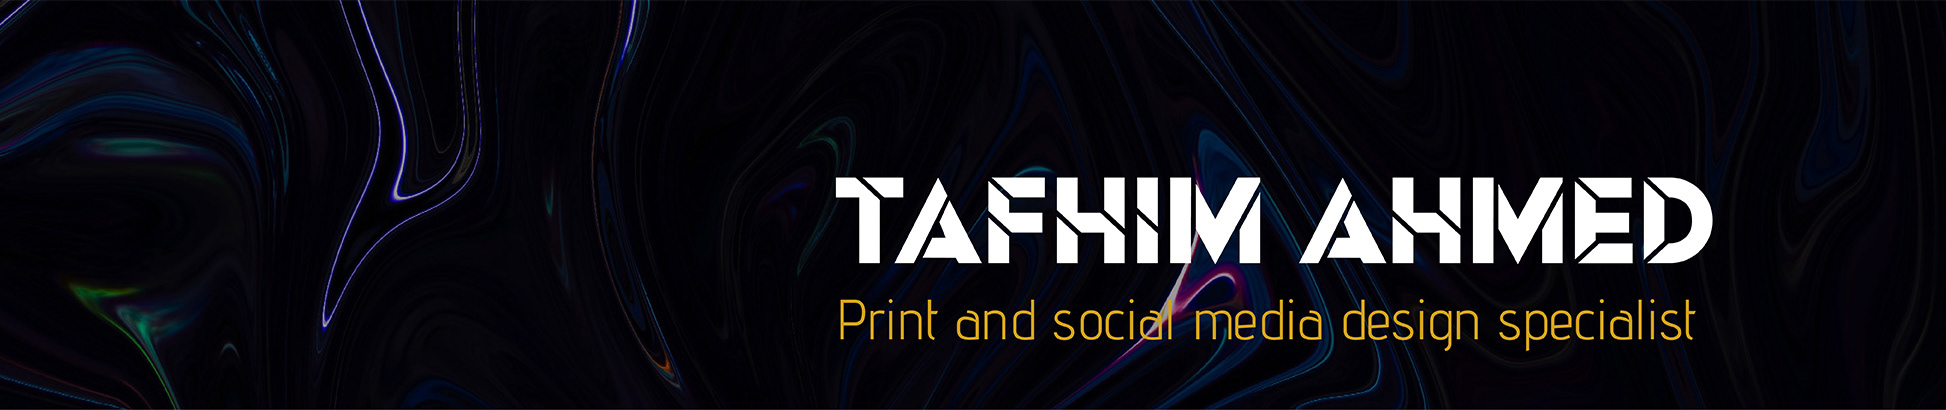 Tafhim Ahmed's profile banner